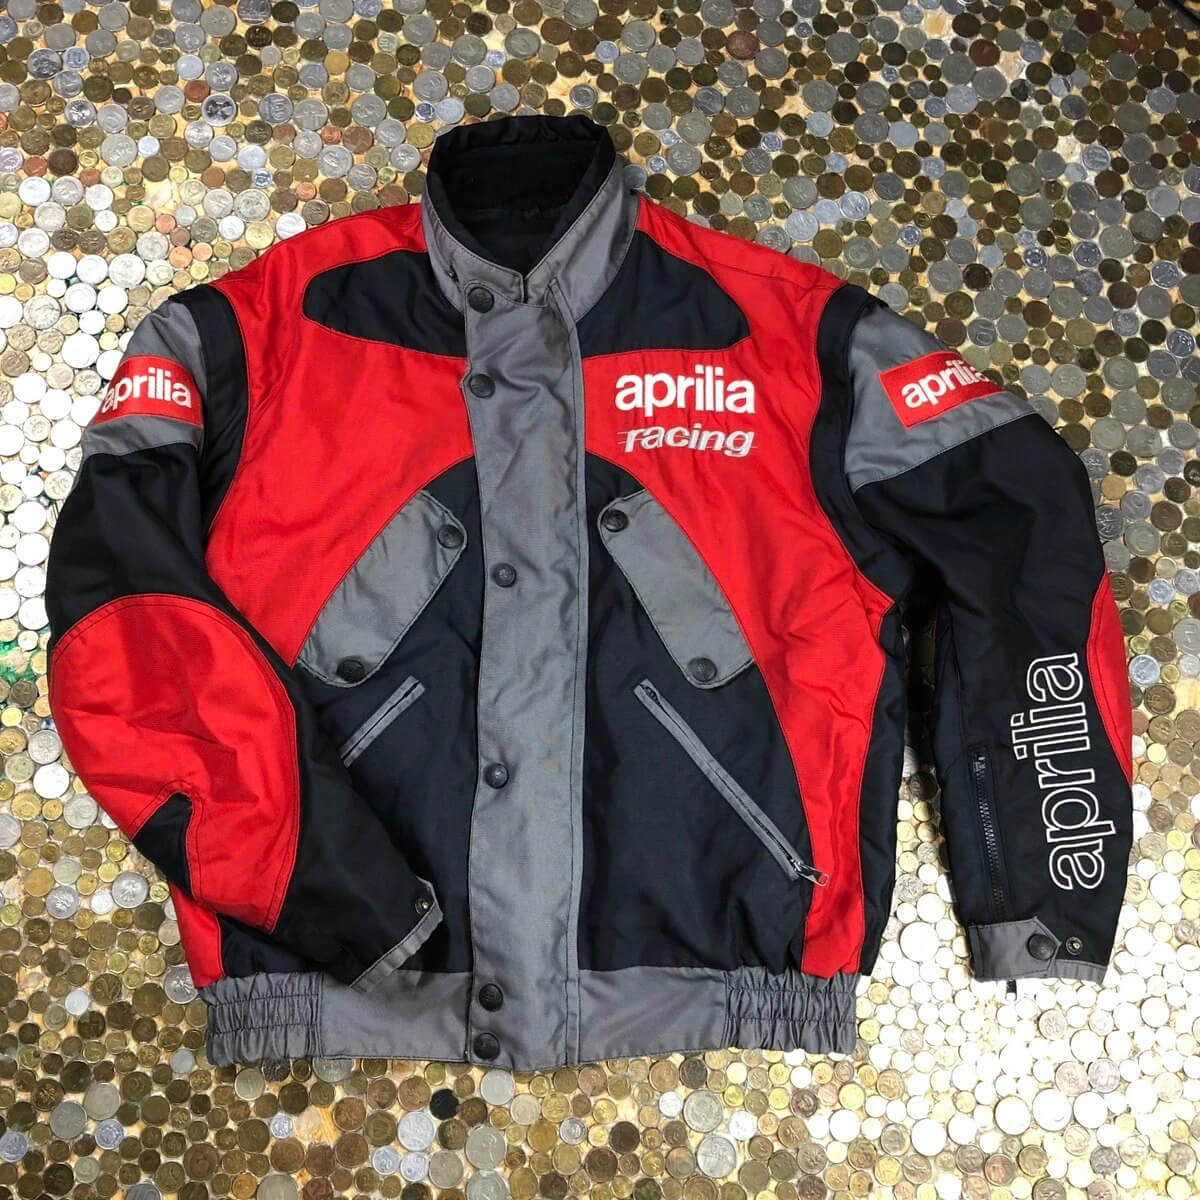 Aprilia Motorcycle Racing Vintage Jacket - Maker of Jacket